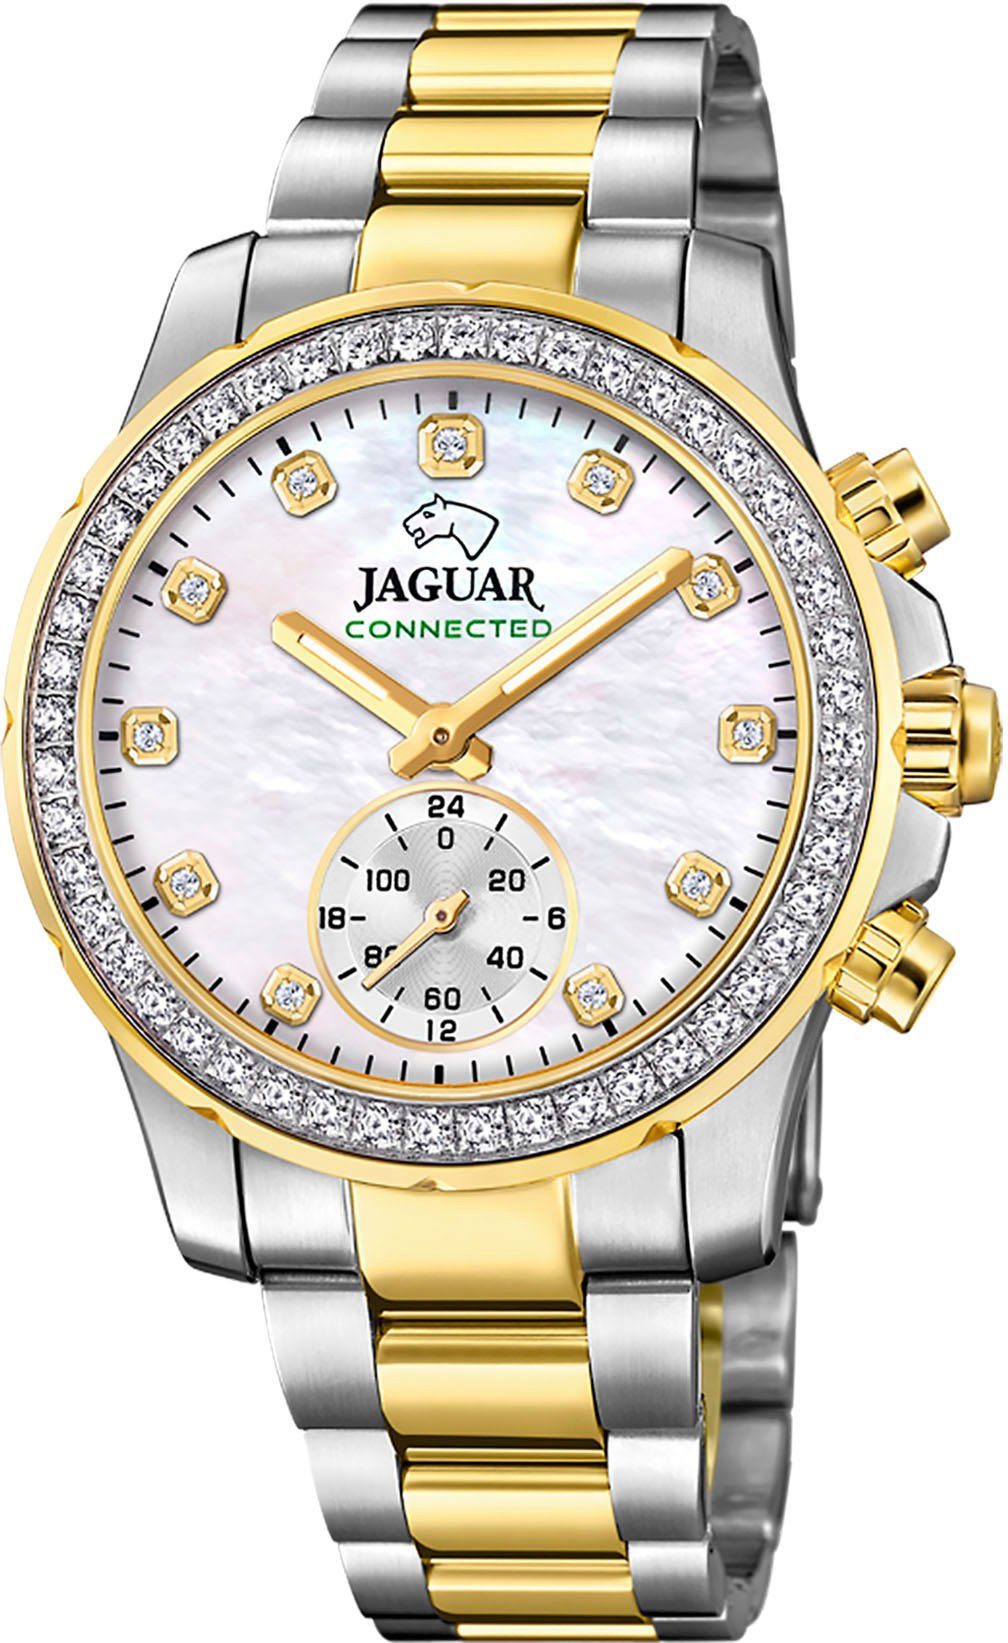 Jaguar Chronograph Connected, J982/1, Armbanduhr, Damenuhr, Saphirglas, Stoppfunktion, Swiss Made